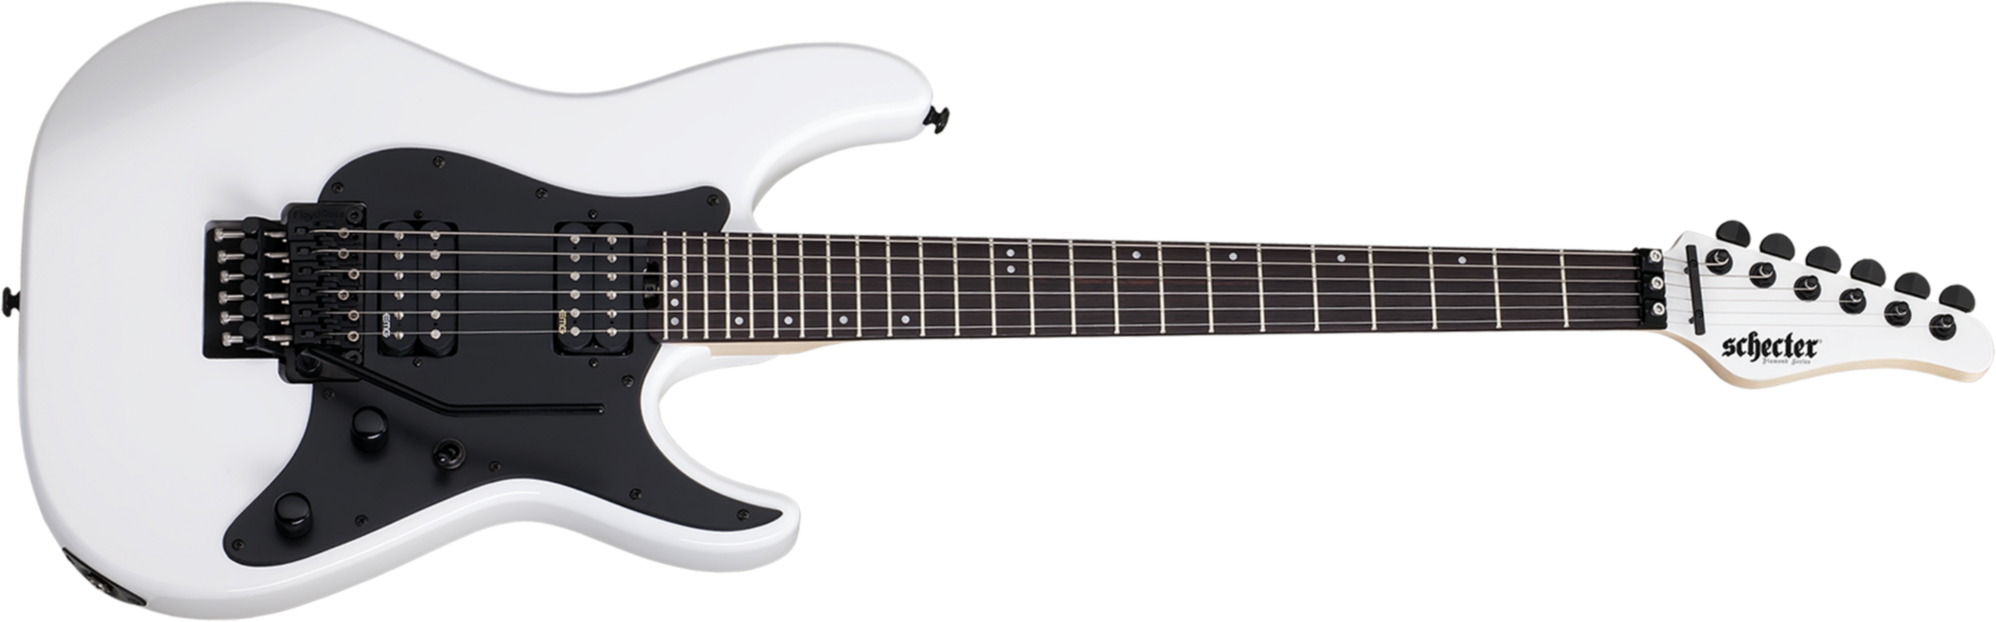 Schecter Sun Valley Super Shredder Fr 2h Emg Rw - White - Str shape electric guitar - Main picture